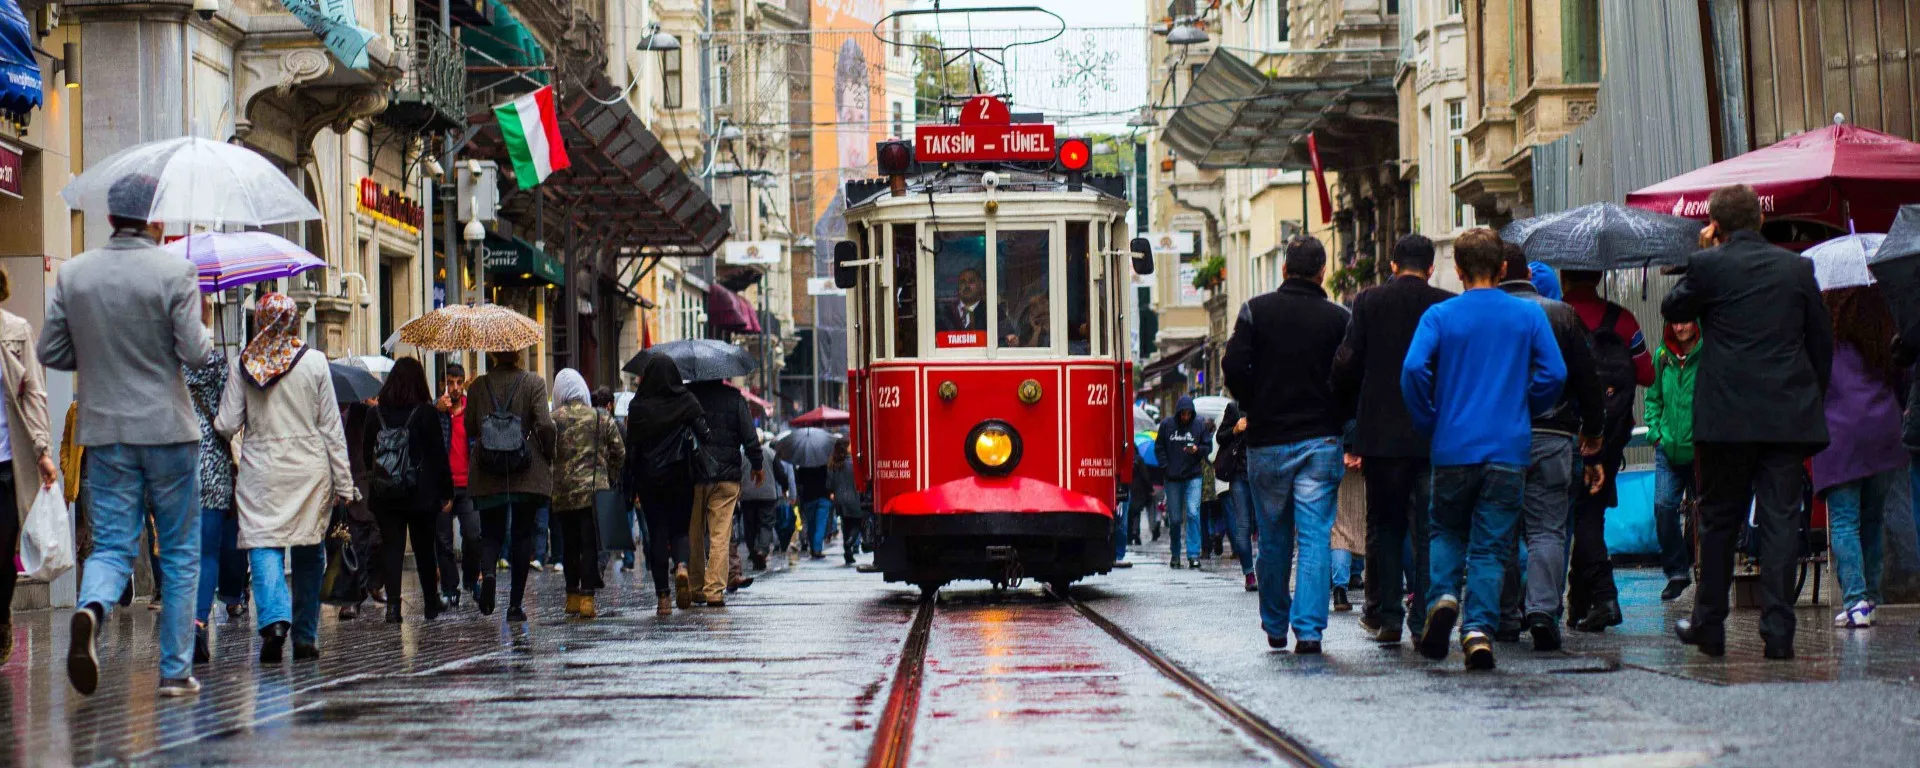 turkey-tours-istanbul-street